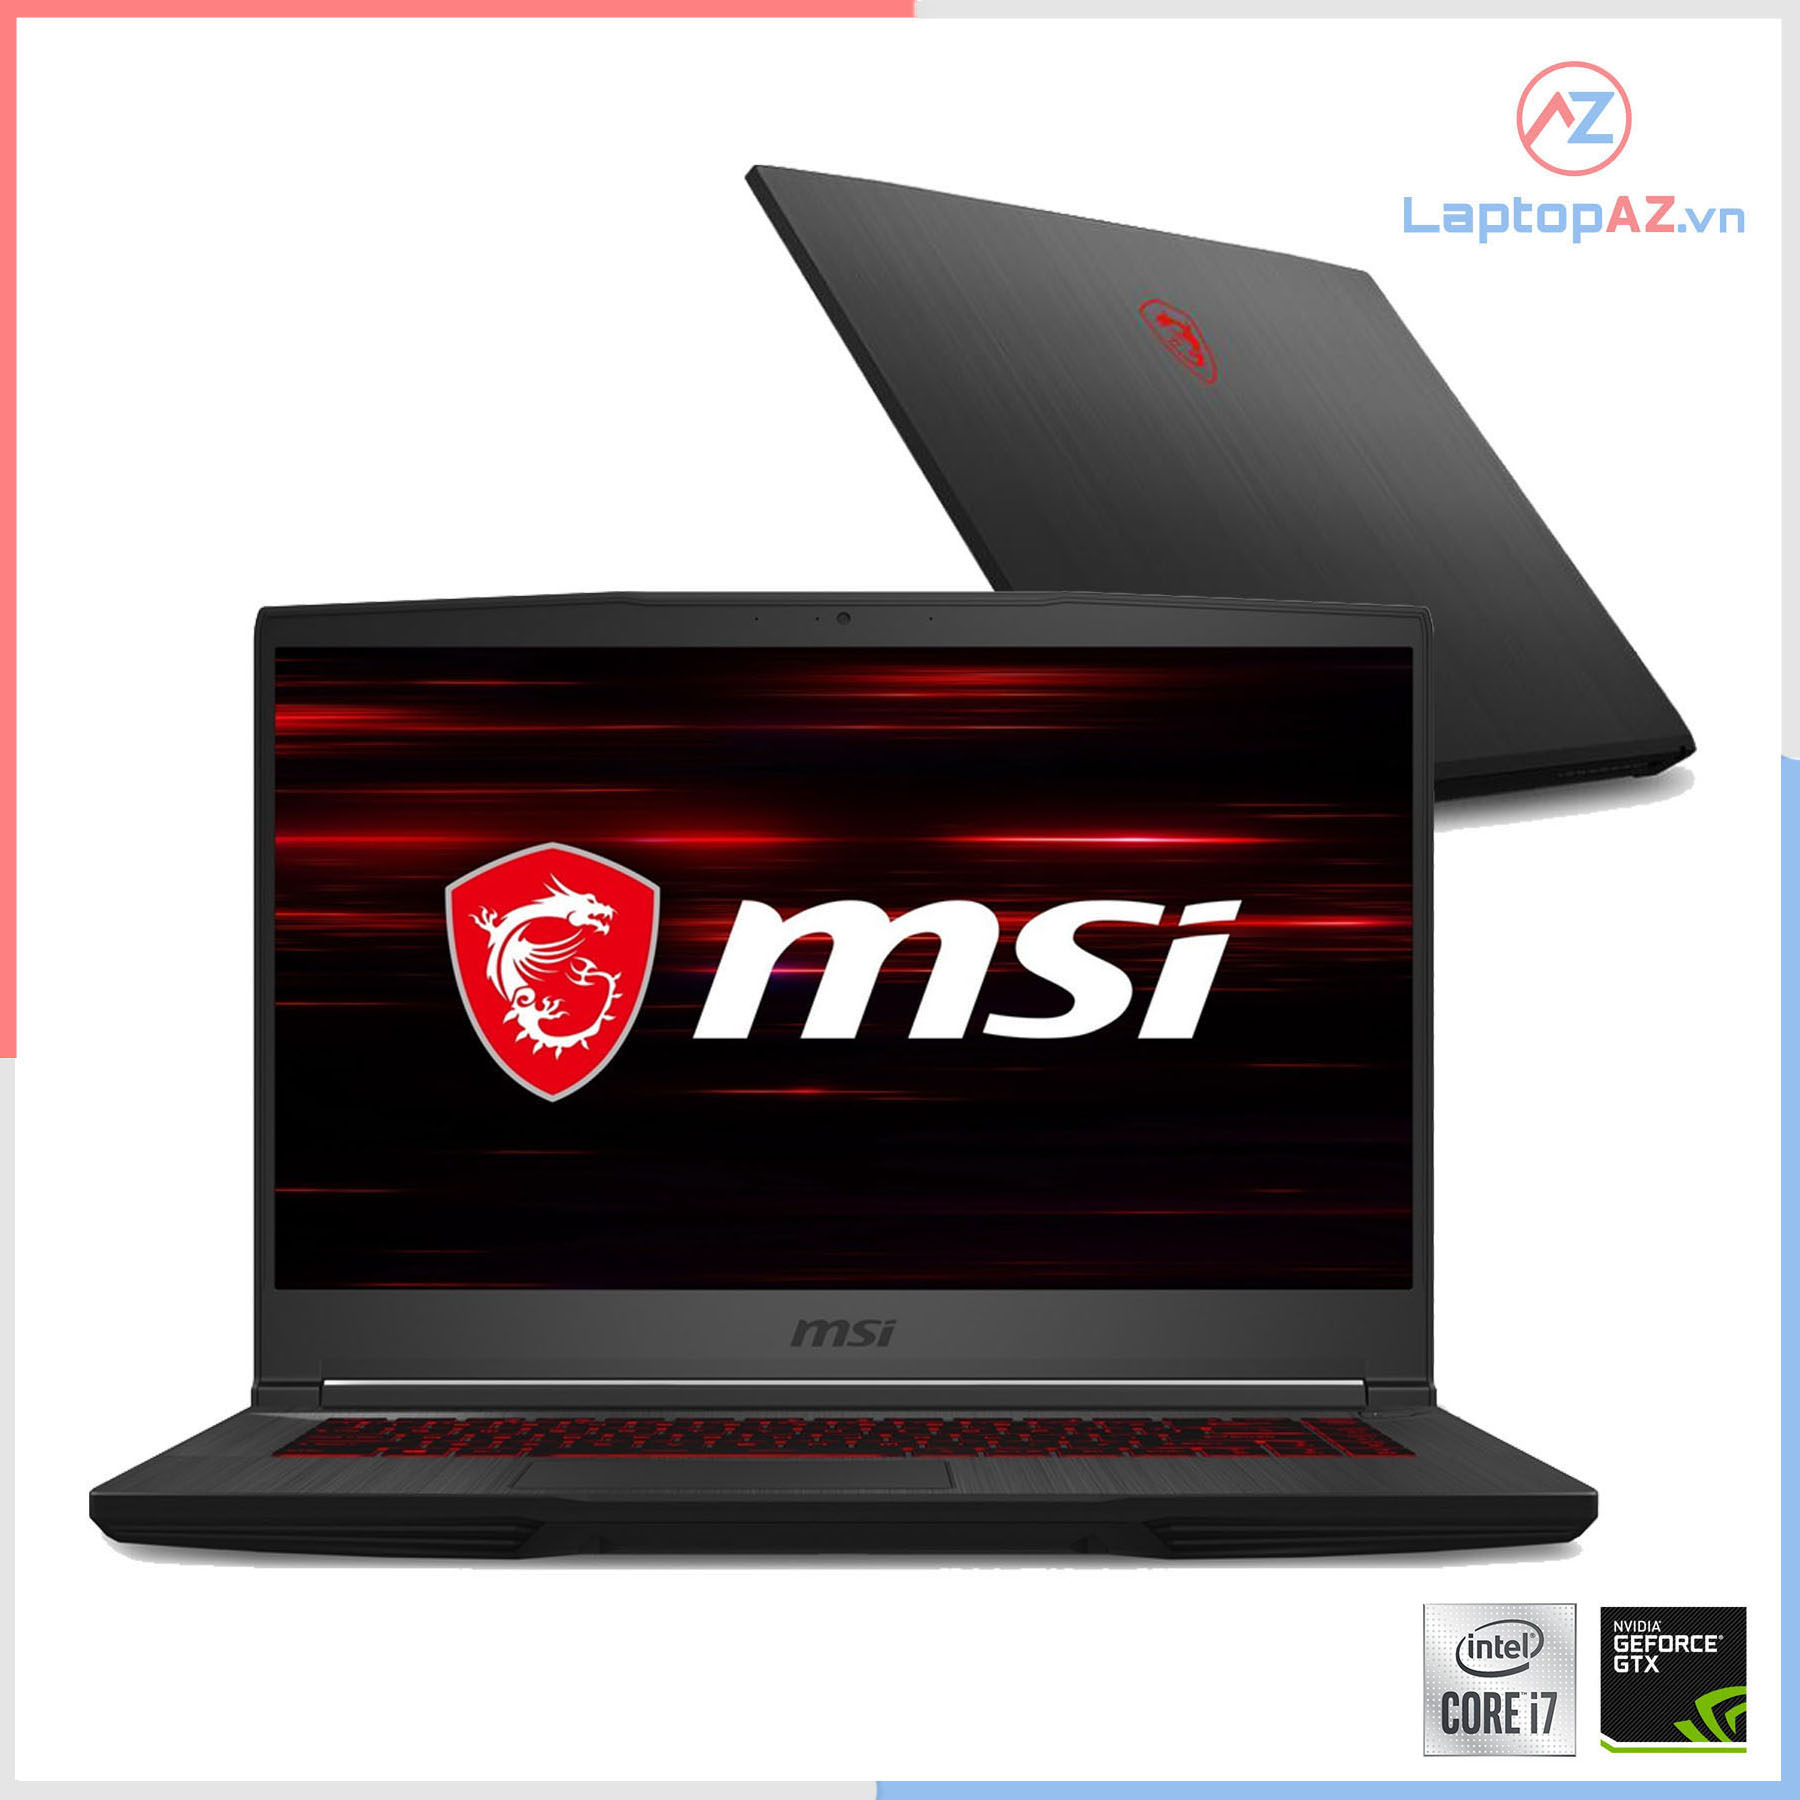 [Mới 99%] Laptop MSI GF75 9SC - 488TH Core i7 9750H, 8GB, 512GB, VGA 4GB NVIDIA GTX 1650, 17.3' FHD IPS